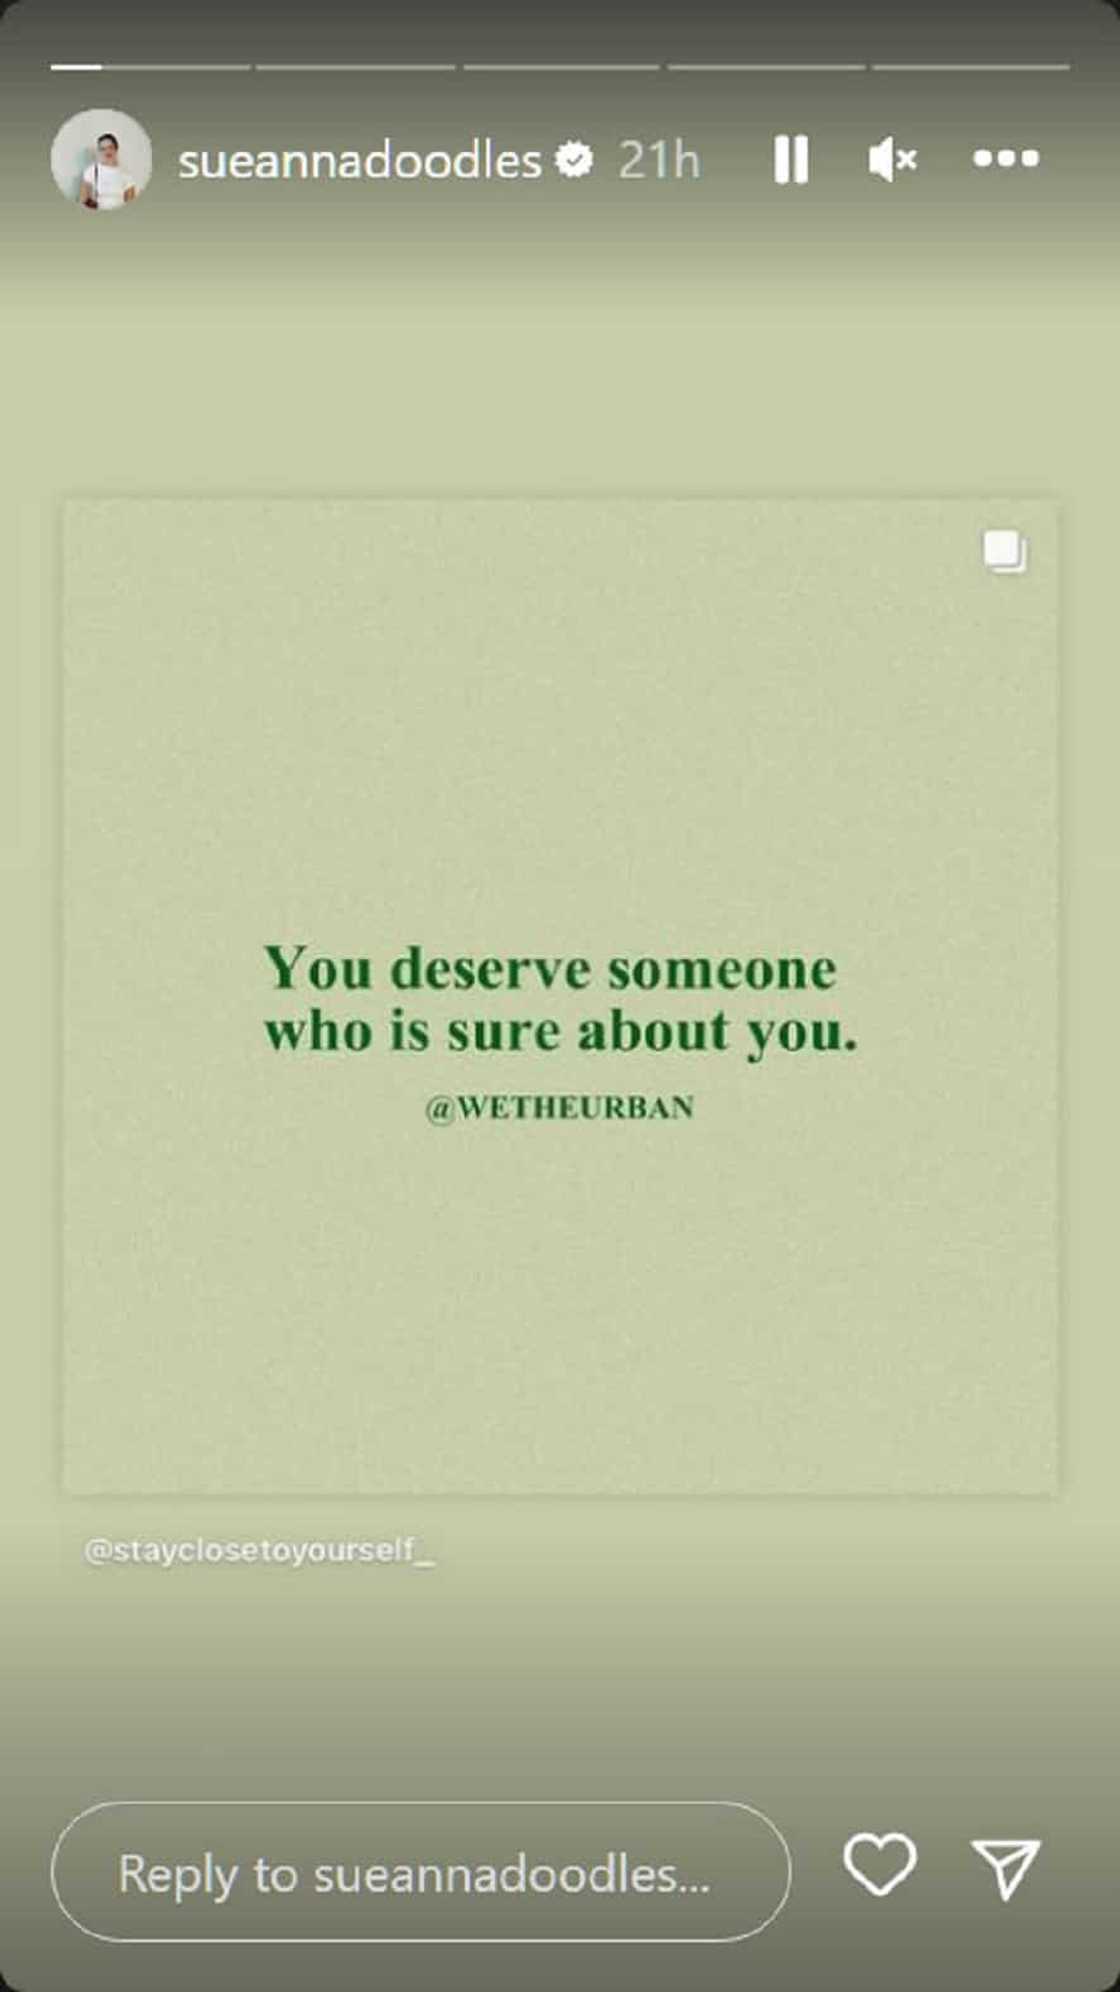 Sue Ramirez, cryptic post niya sa social media, usap-usapan: “You deserve someone who is sure about you”